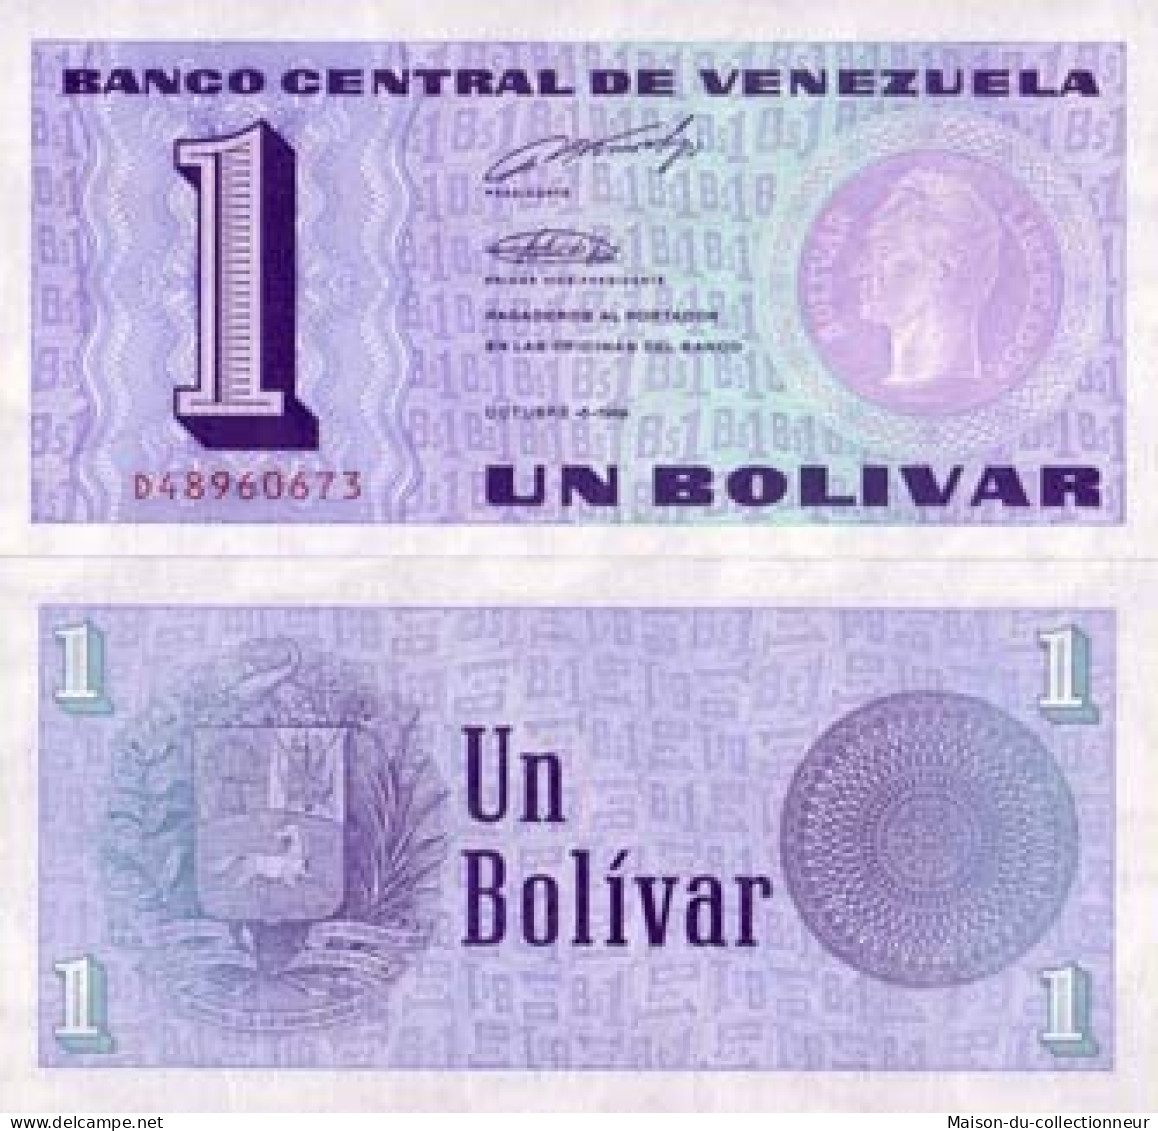 Billet De Banque Venezuela Pk N° 68 - 1 Bolivar - Venezuela